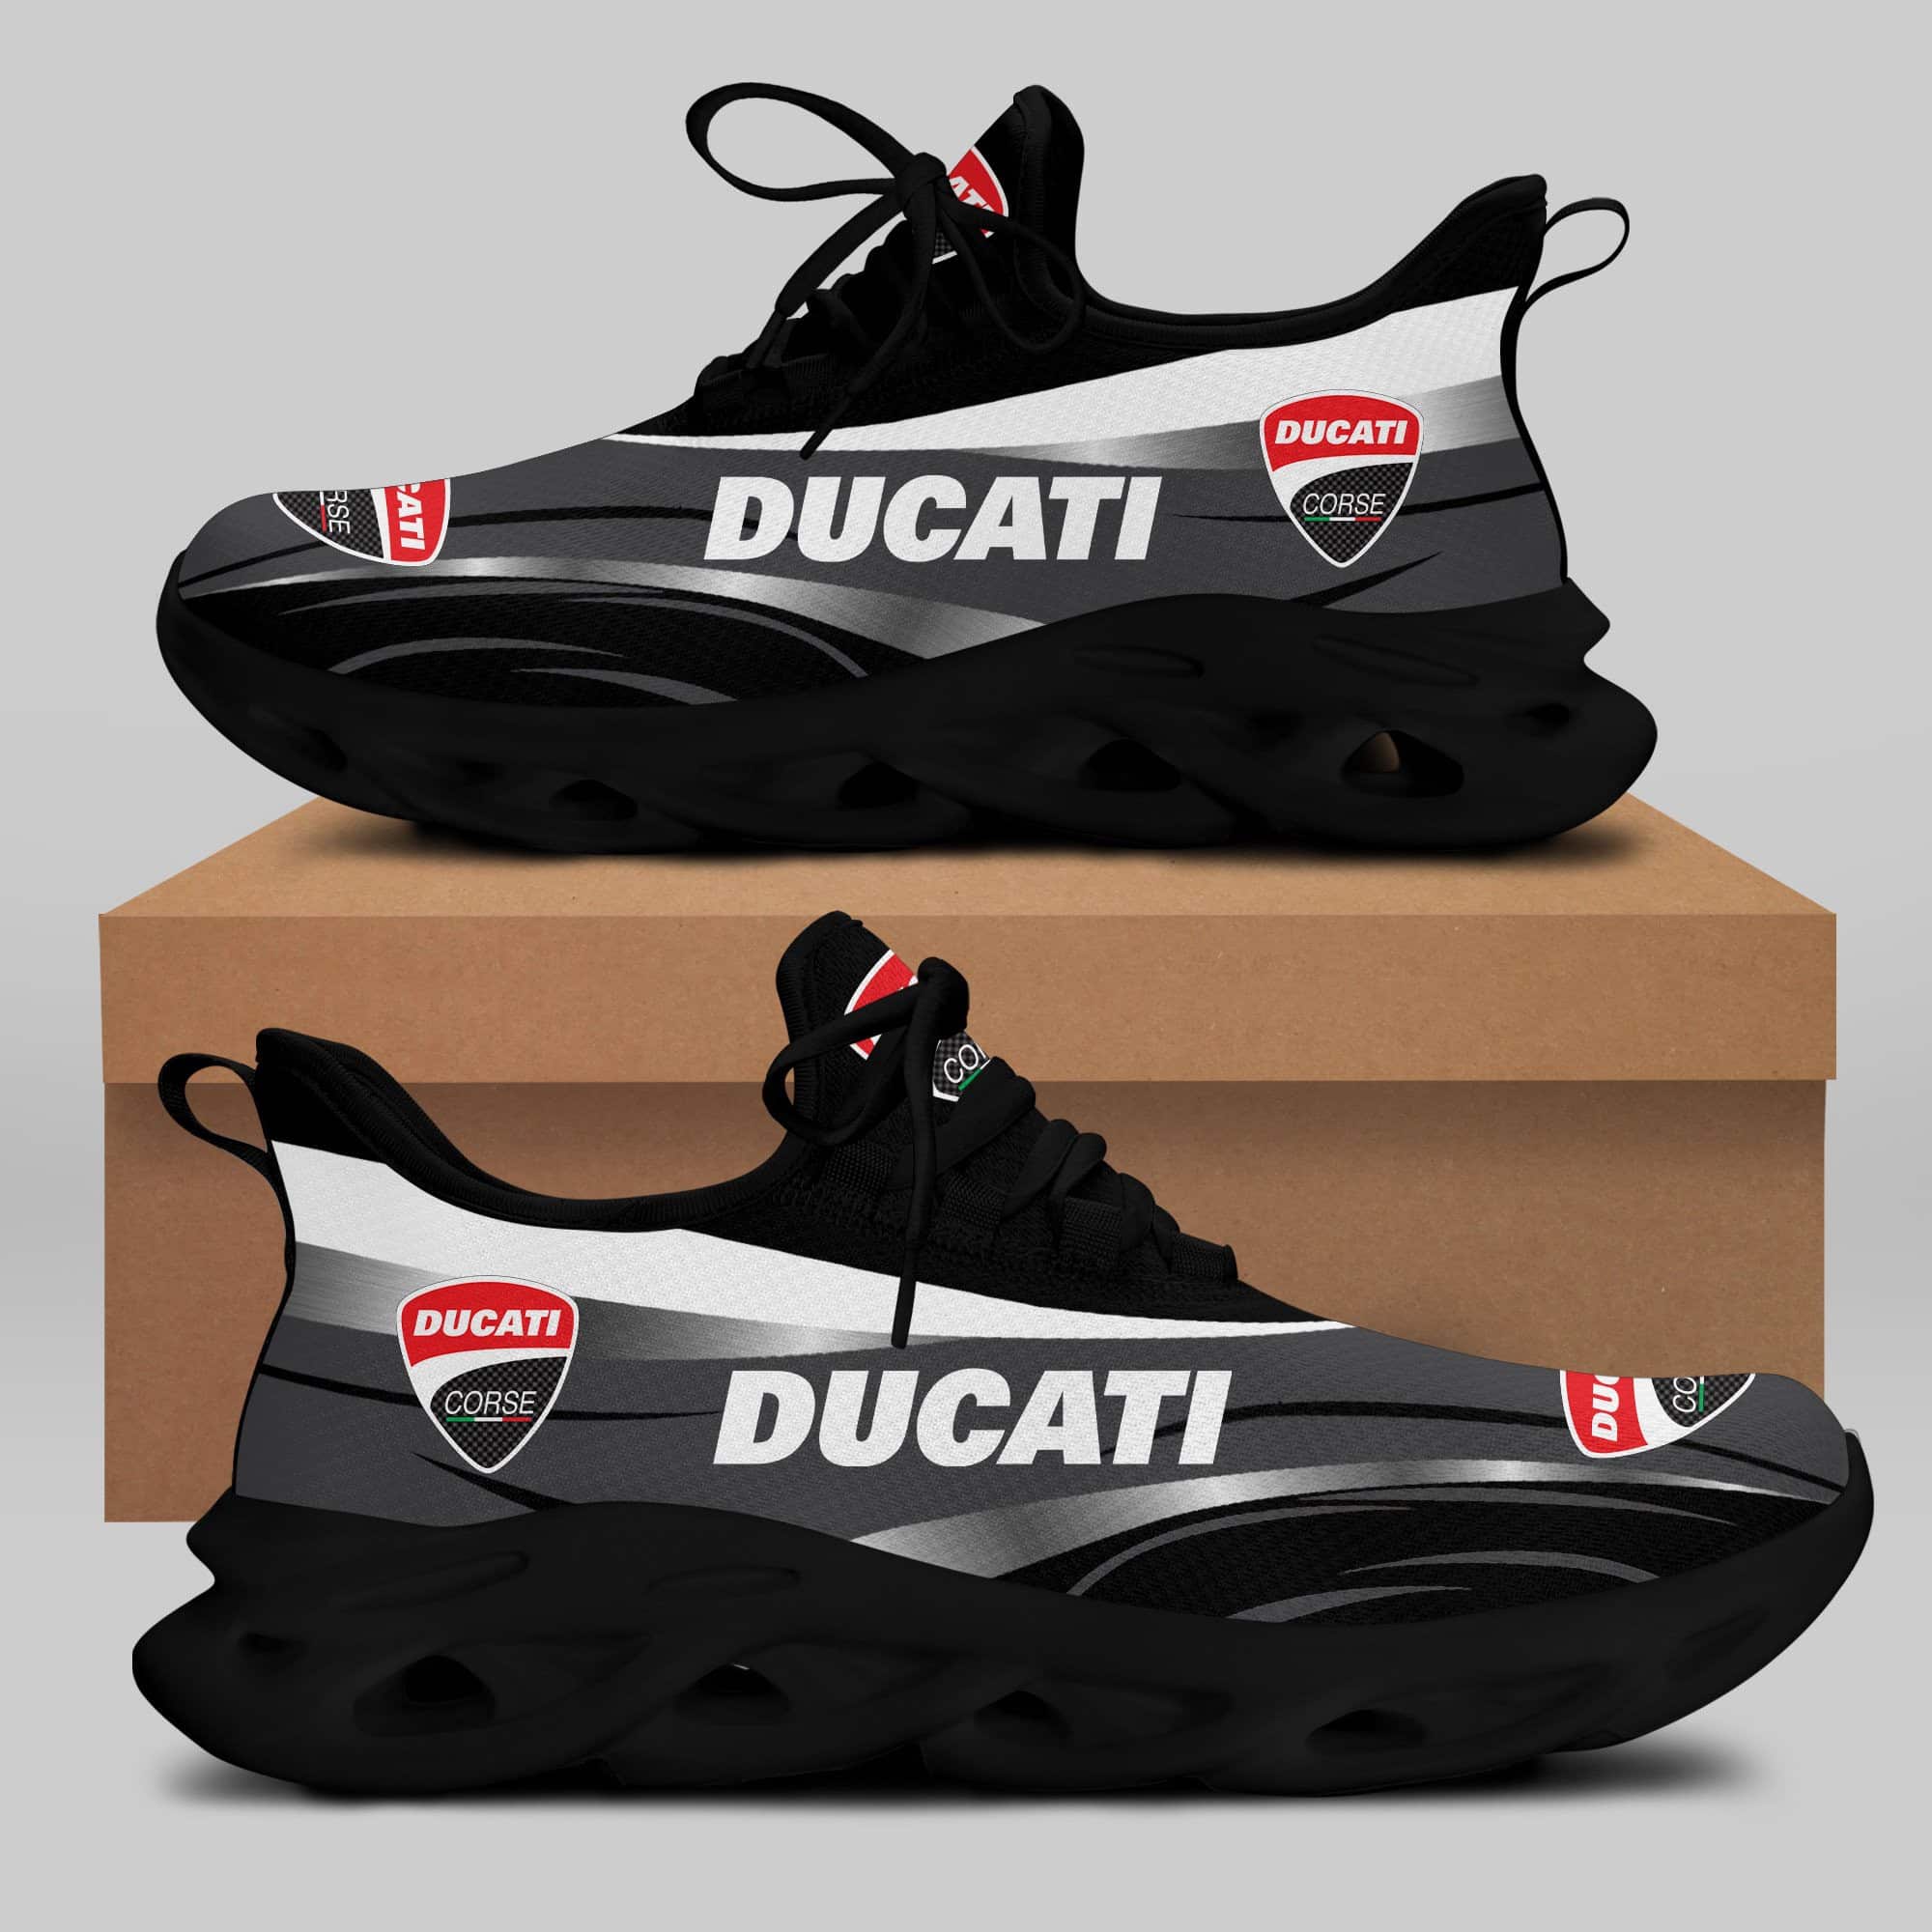 Ducati Racing Running Shoes Max Soul Shoes Sneakers Ver 53 1